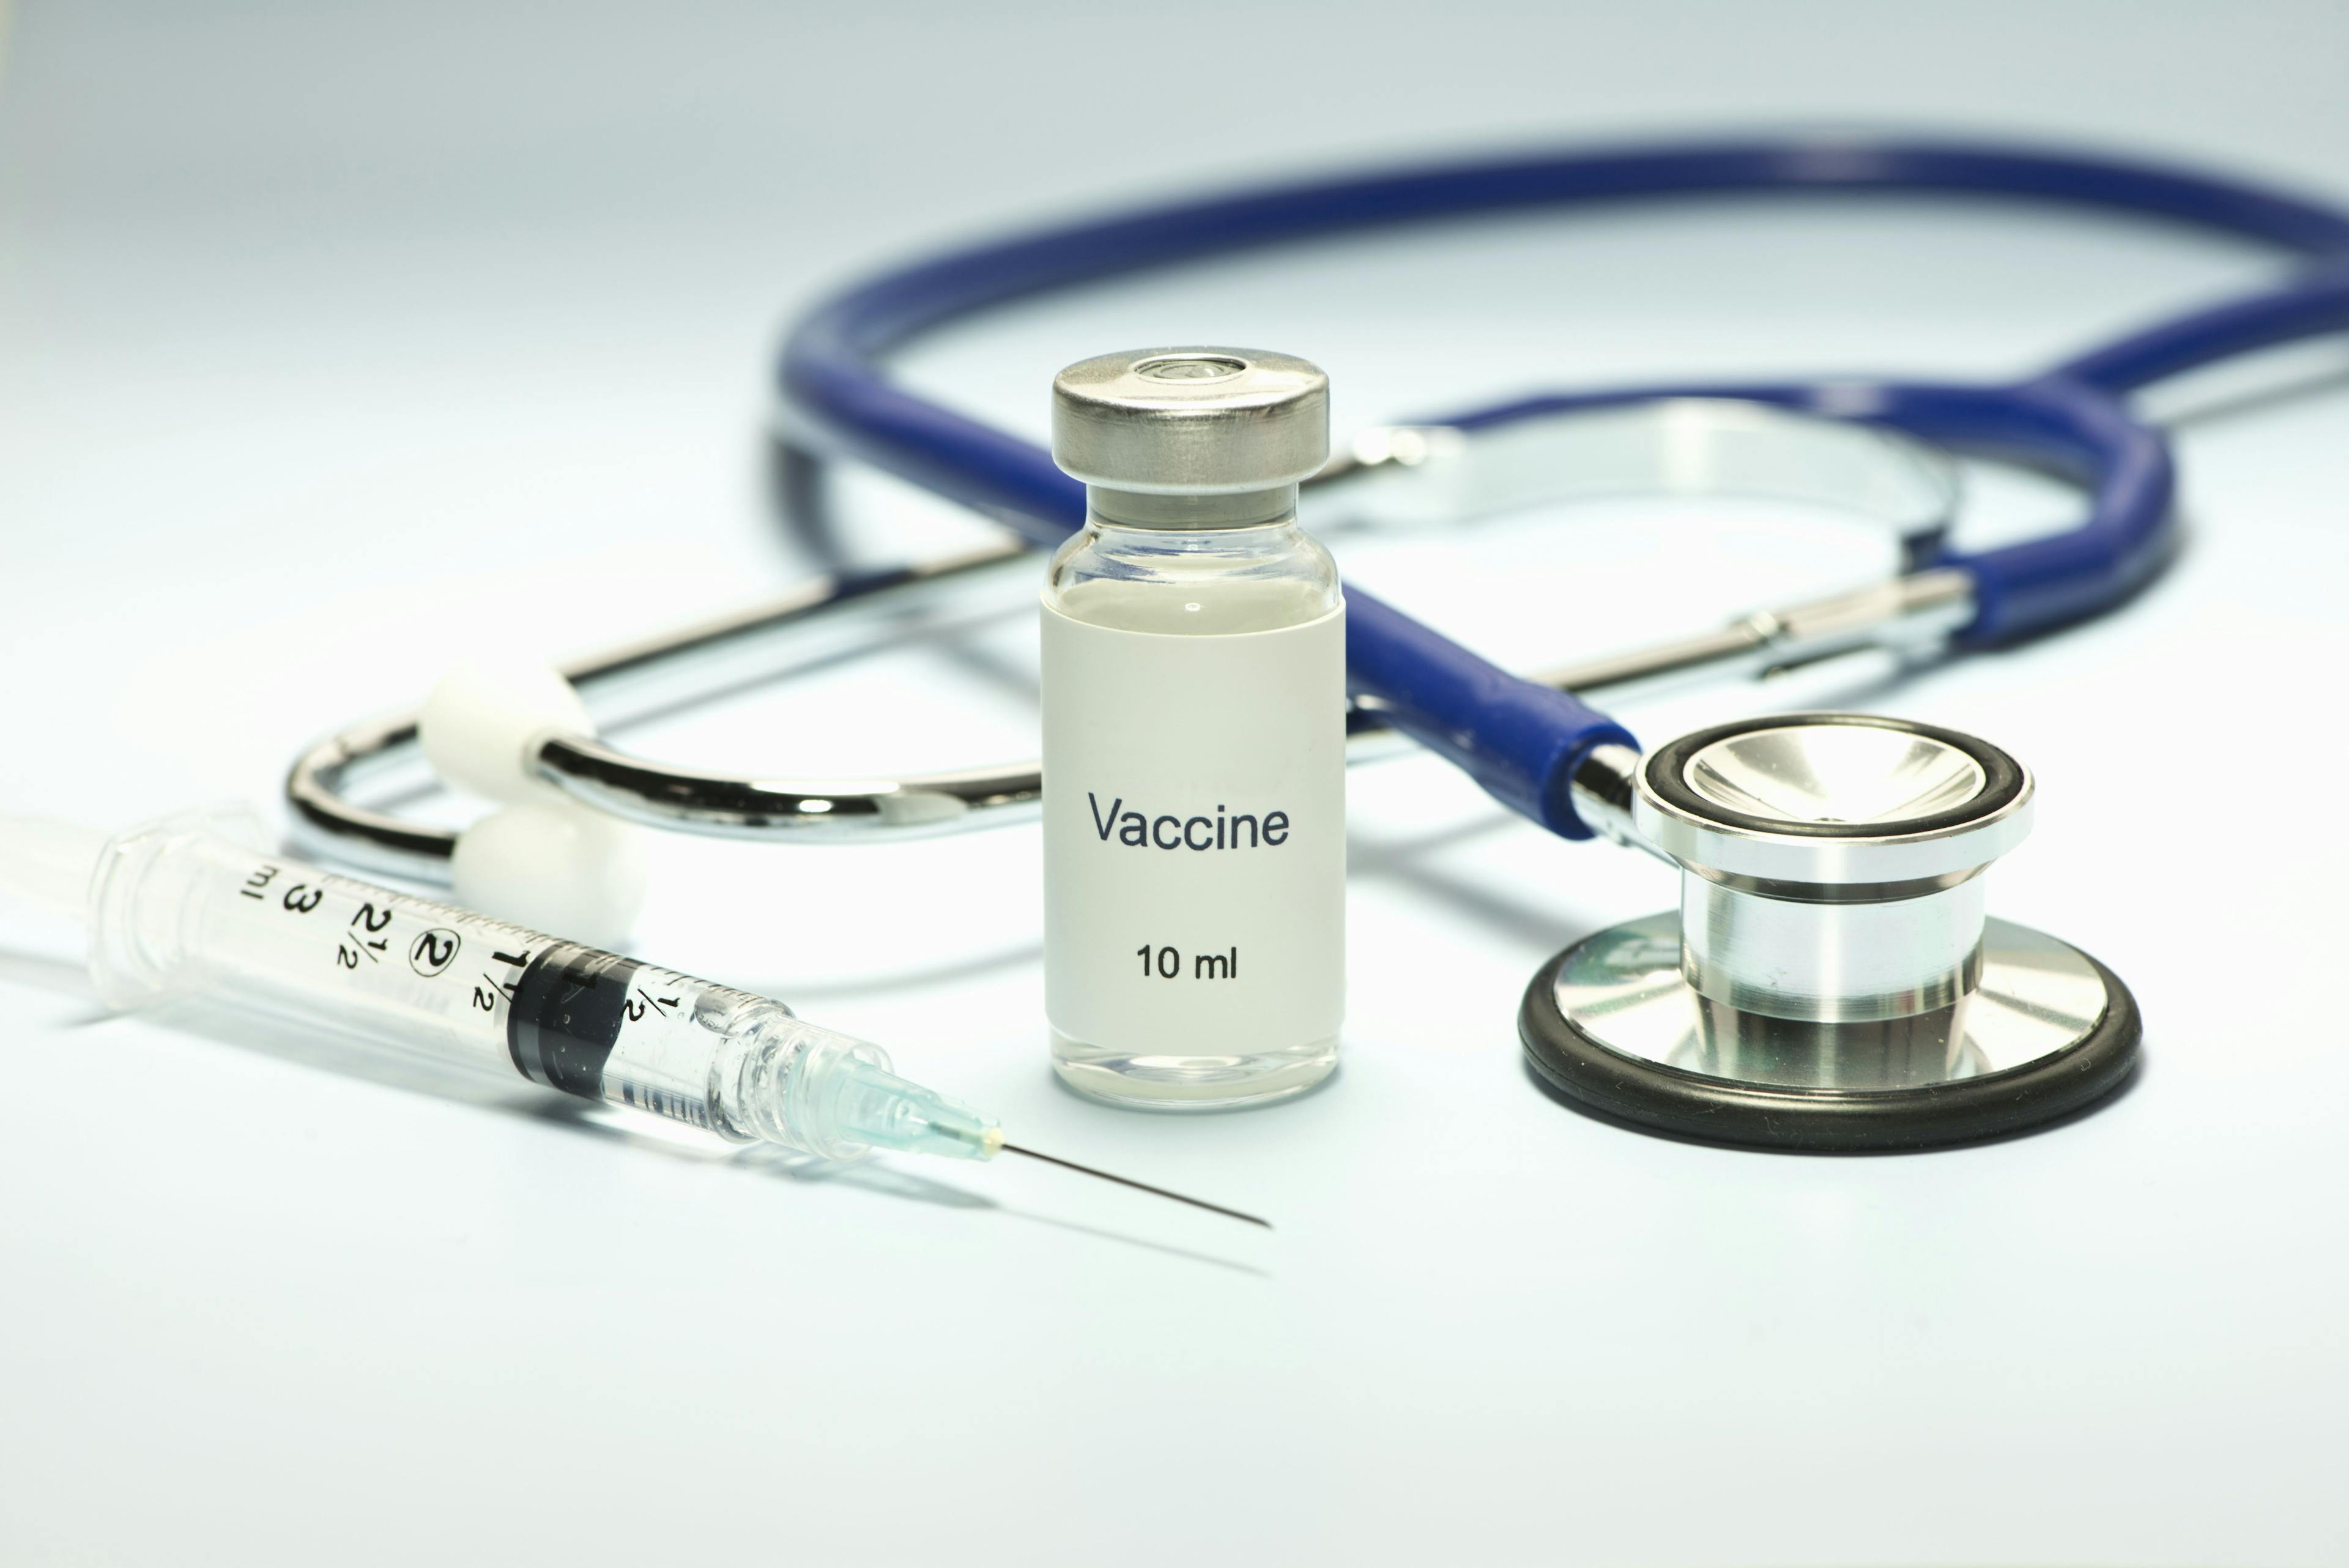 vaccine vial, syringe, and stethoscope